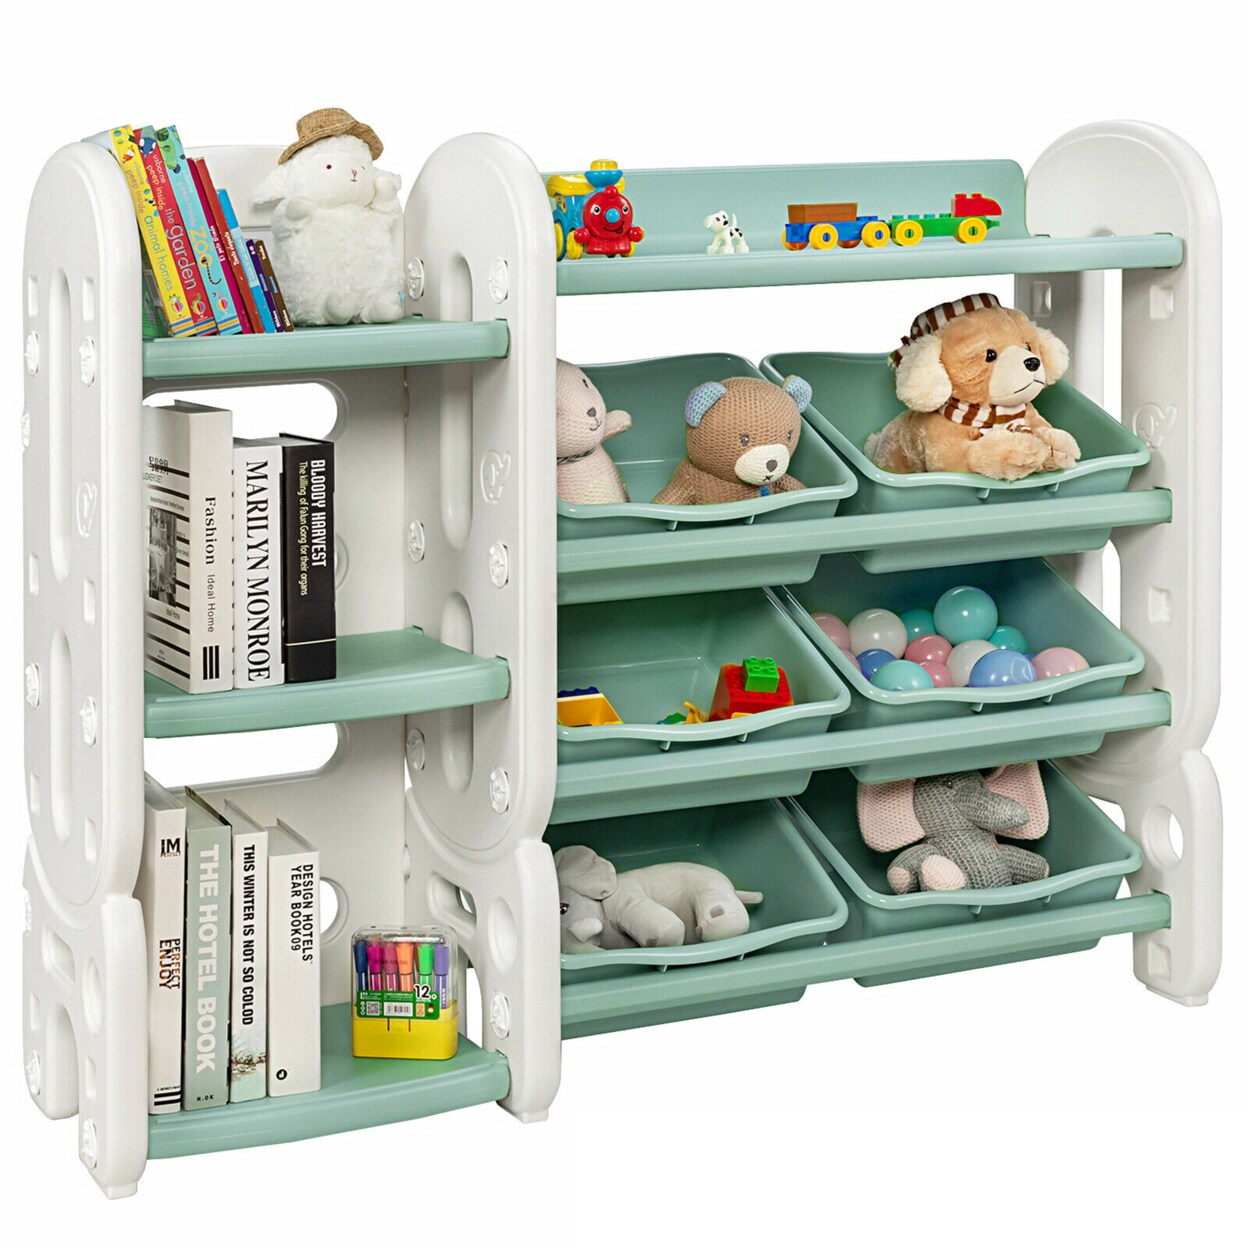 Gymax Kids Toy Storage Organizer w/Bins and Multi-Layer Shelf for Bedroom Playroom Blue/Green